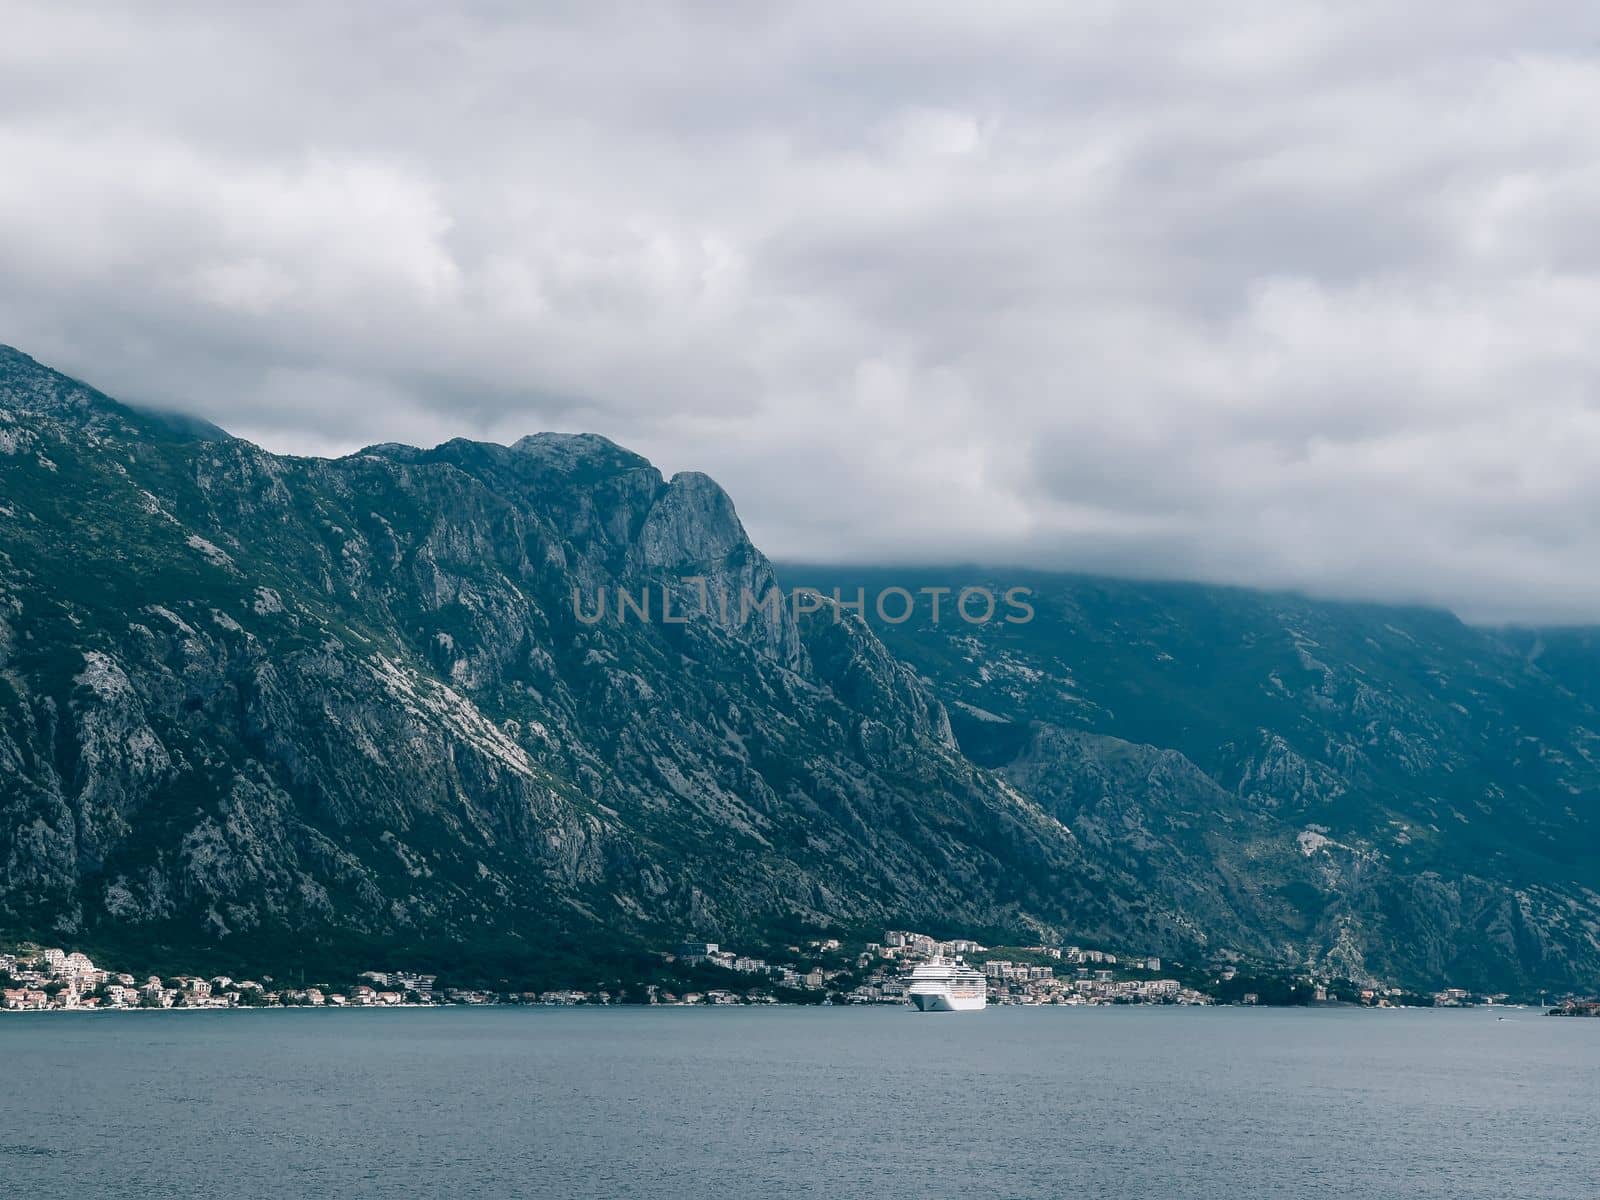 White cruise liner sails along the mountainous coast of the sea. High quality photo